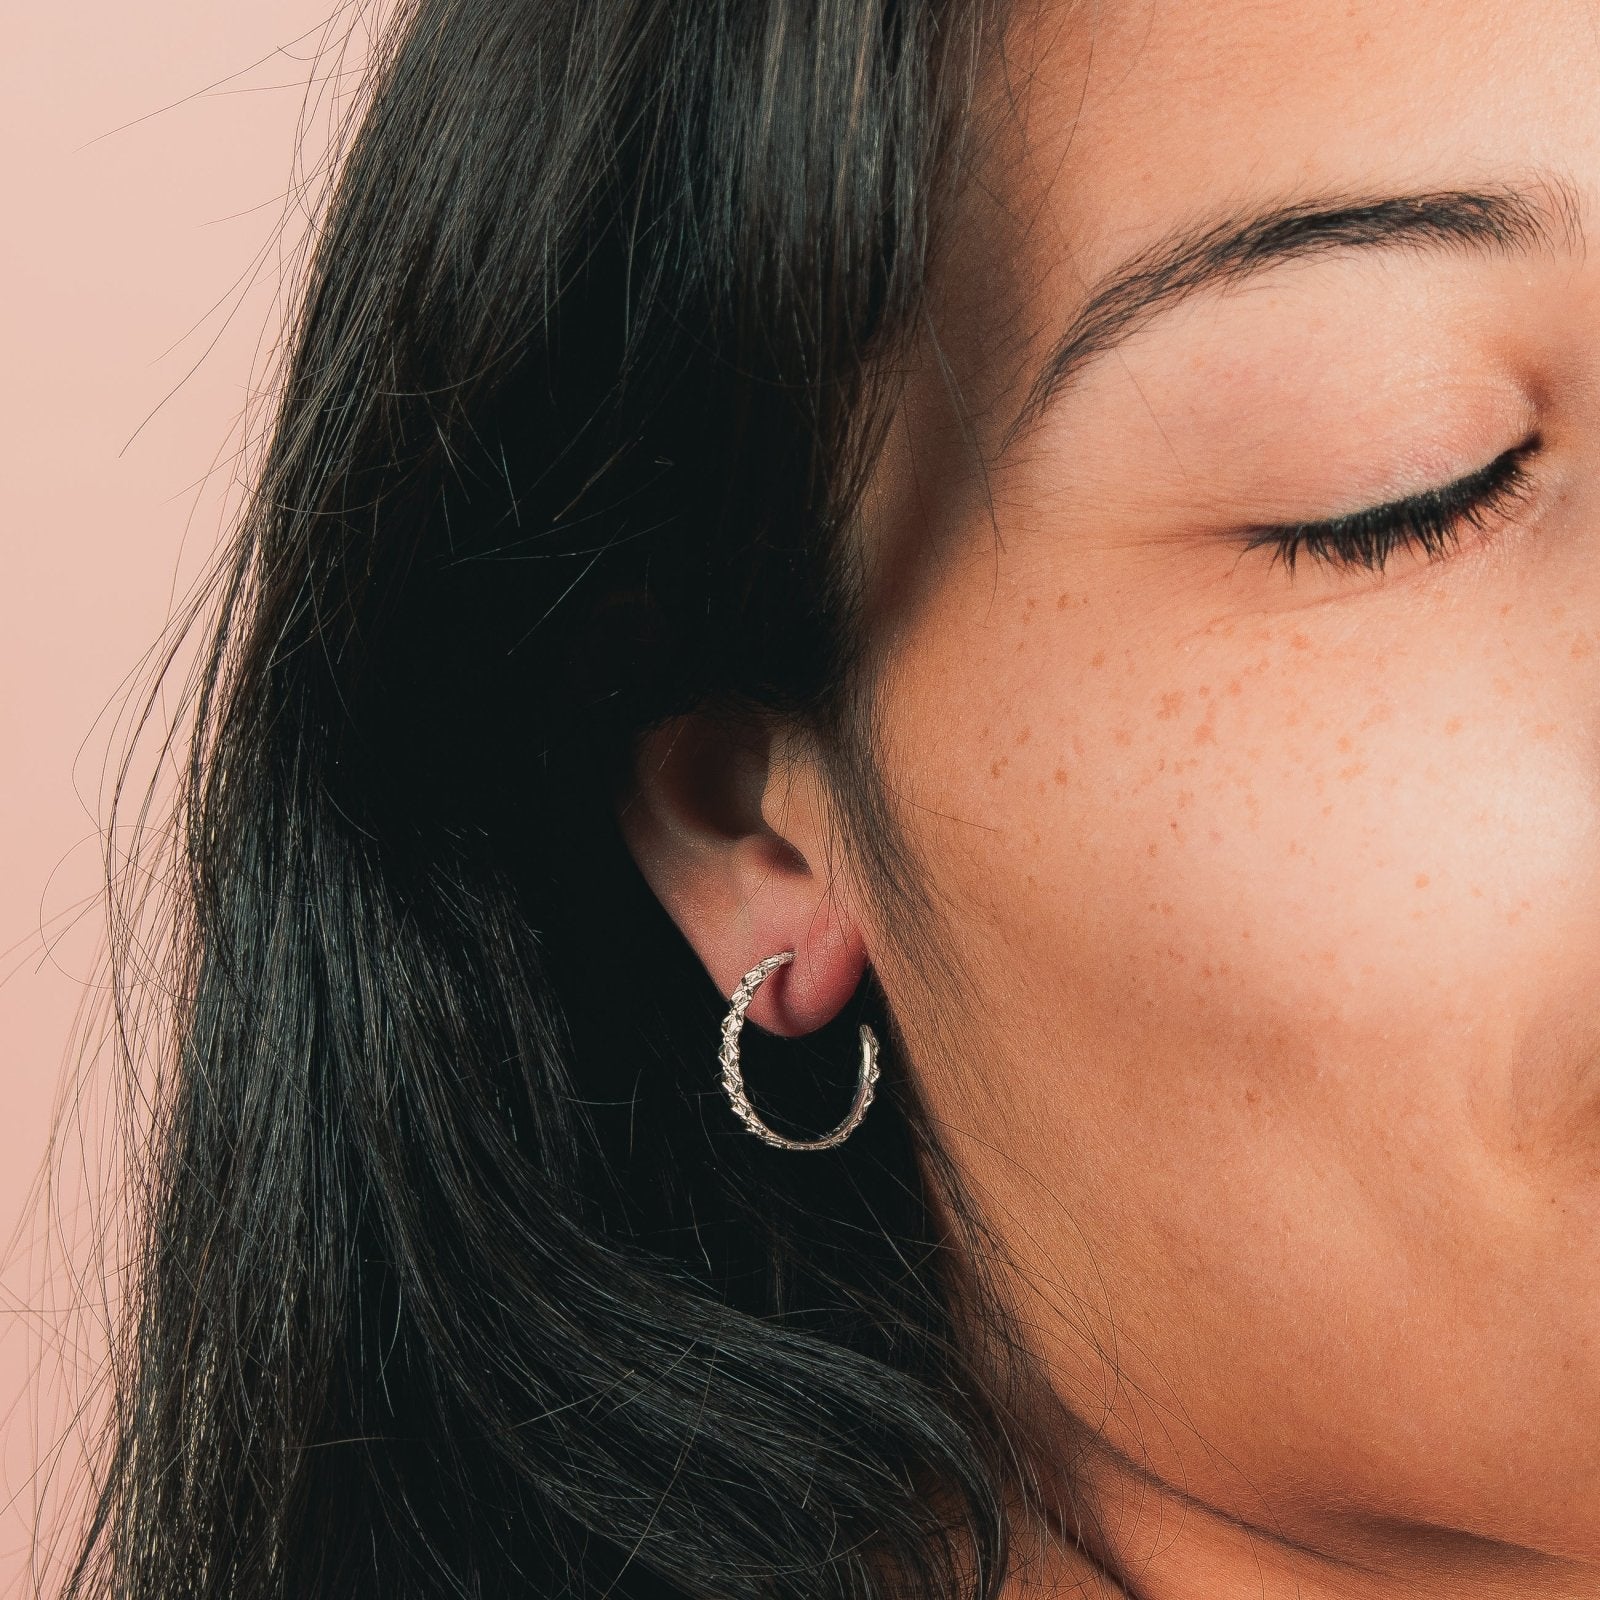 XOE Hoop Earrings - Melanie Golden Jewelry - Designer Series, earrings, hoop earrings, symbolic